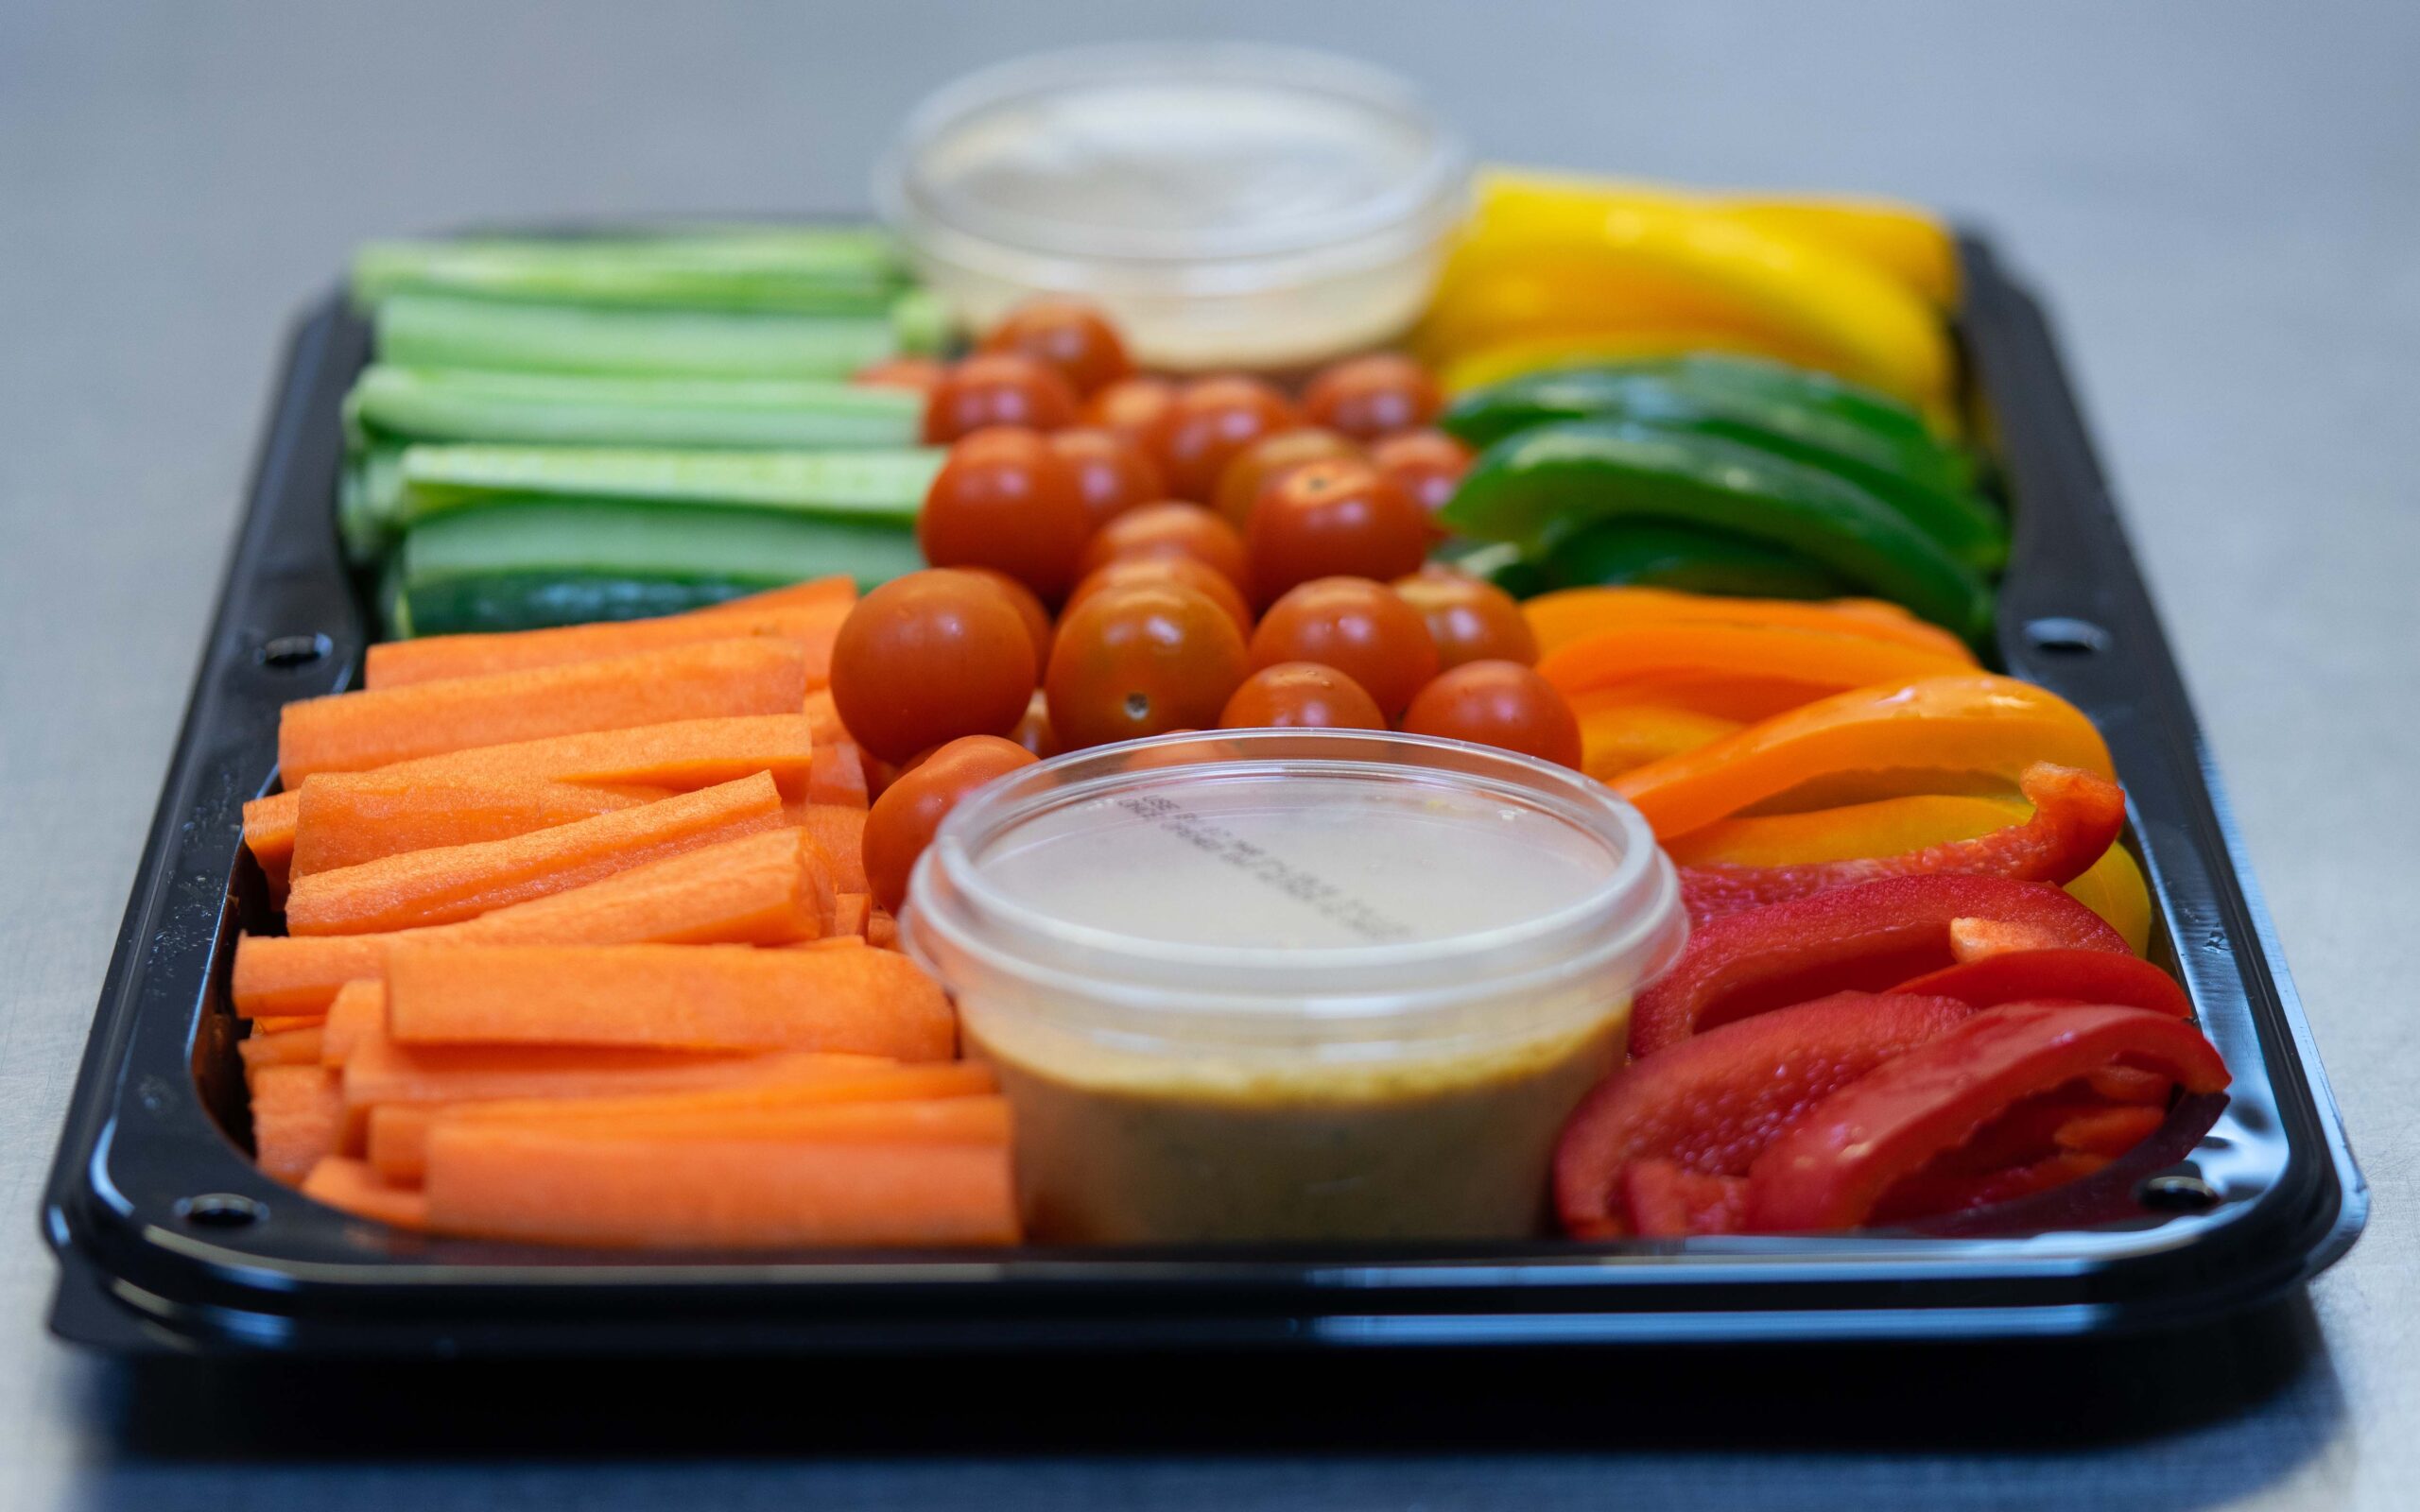 Assortment of fruit and vegetable platter